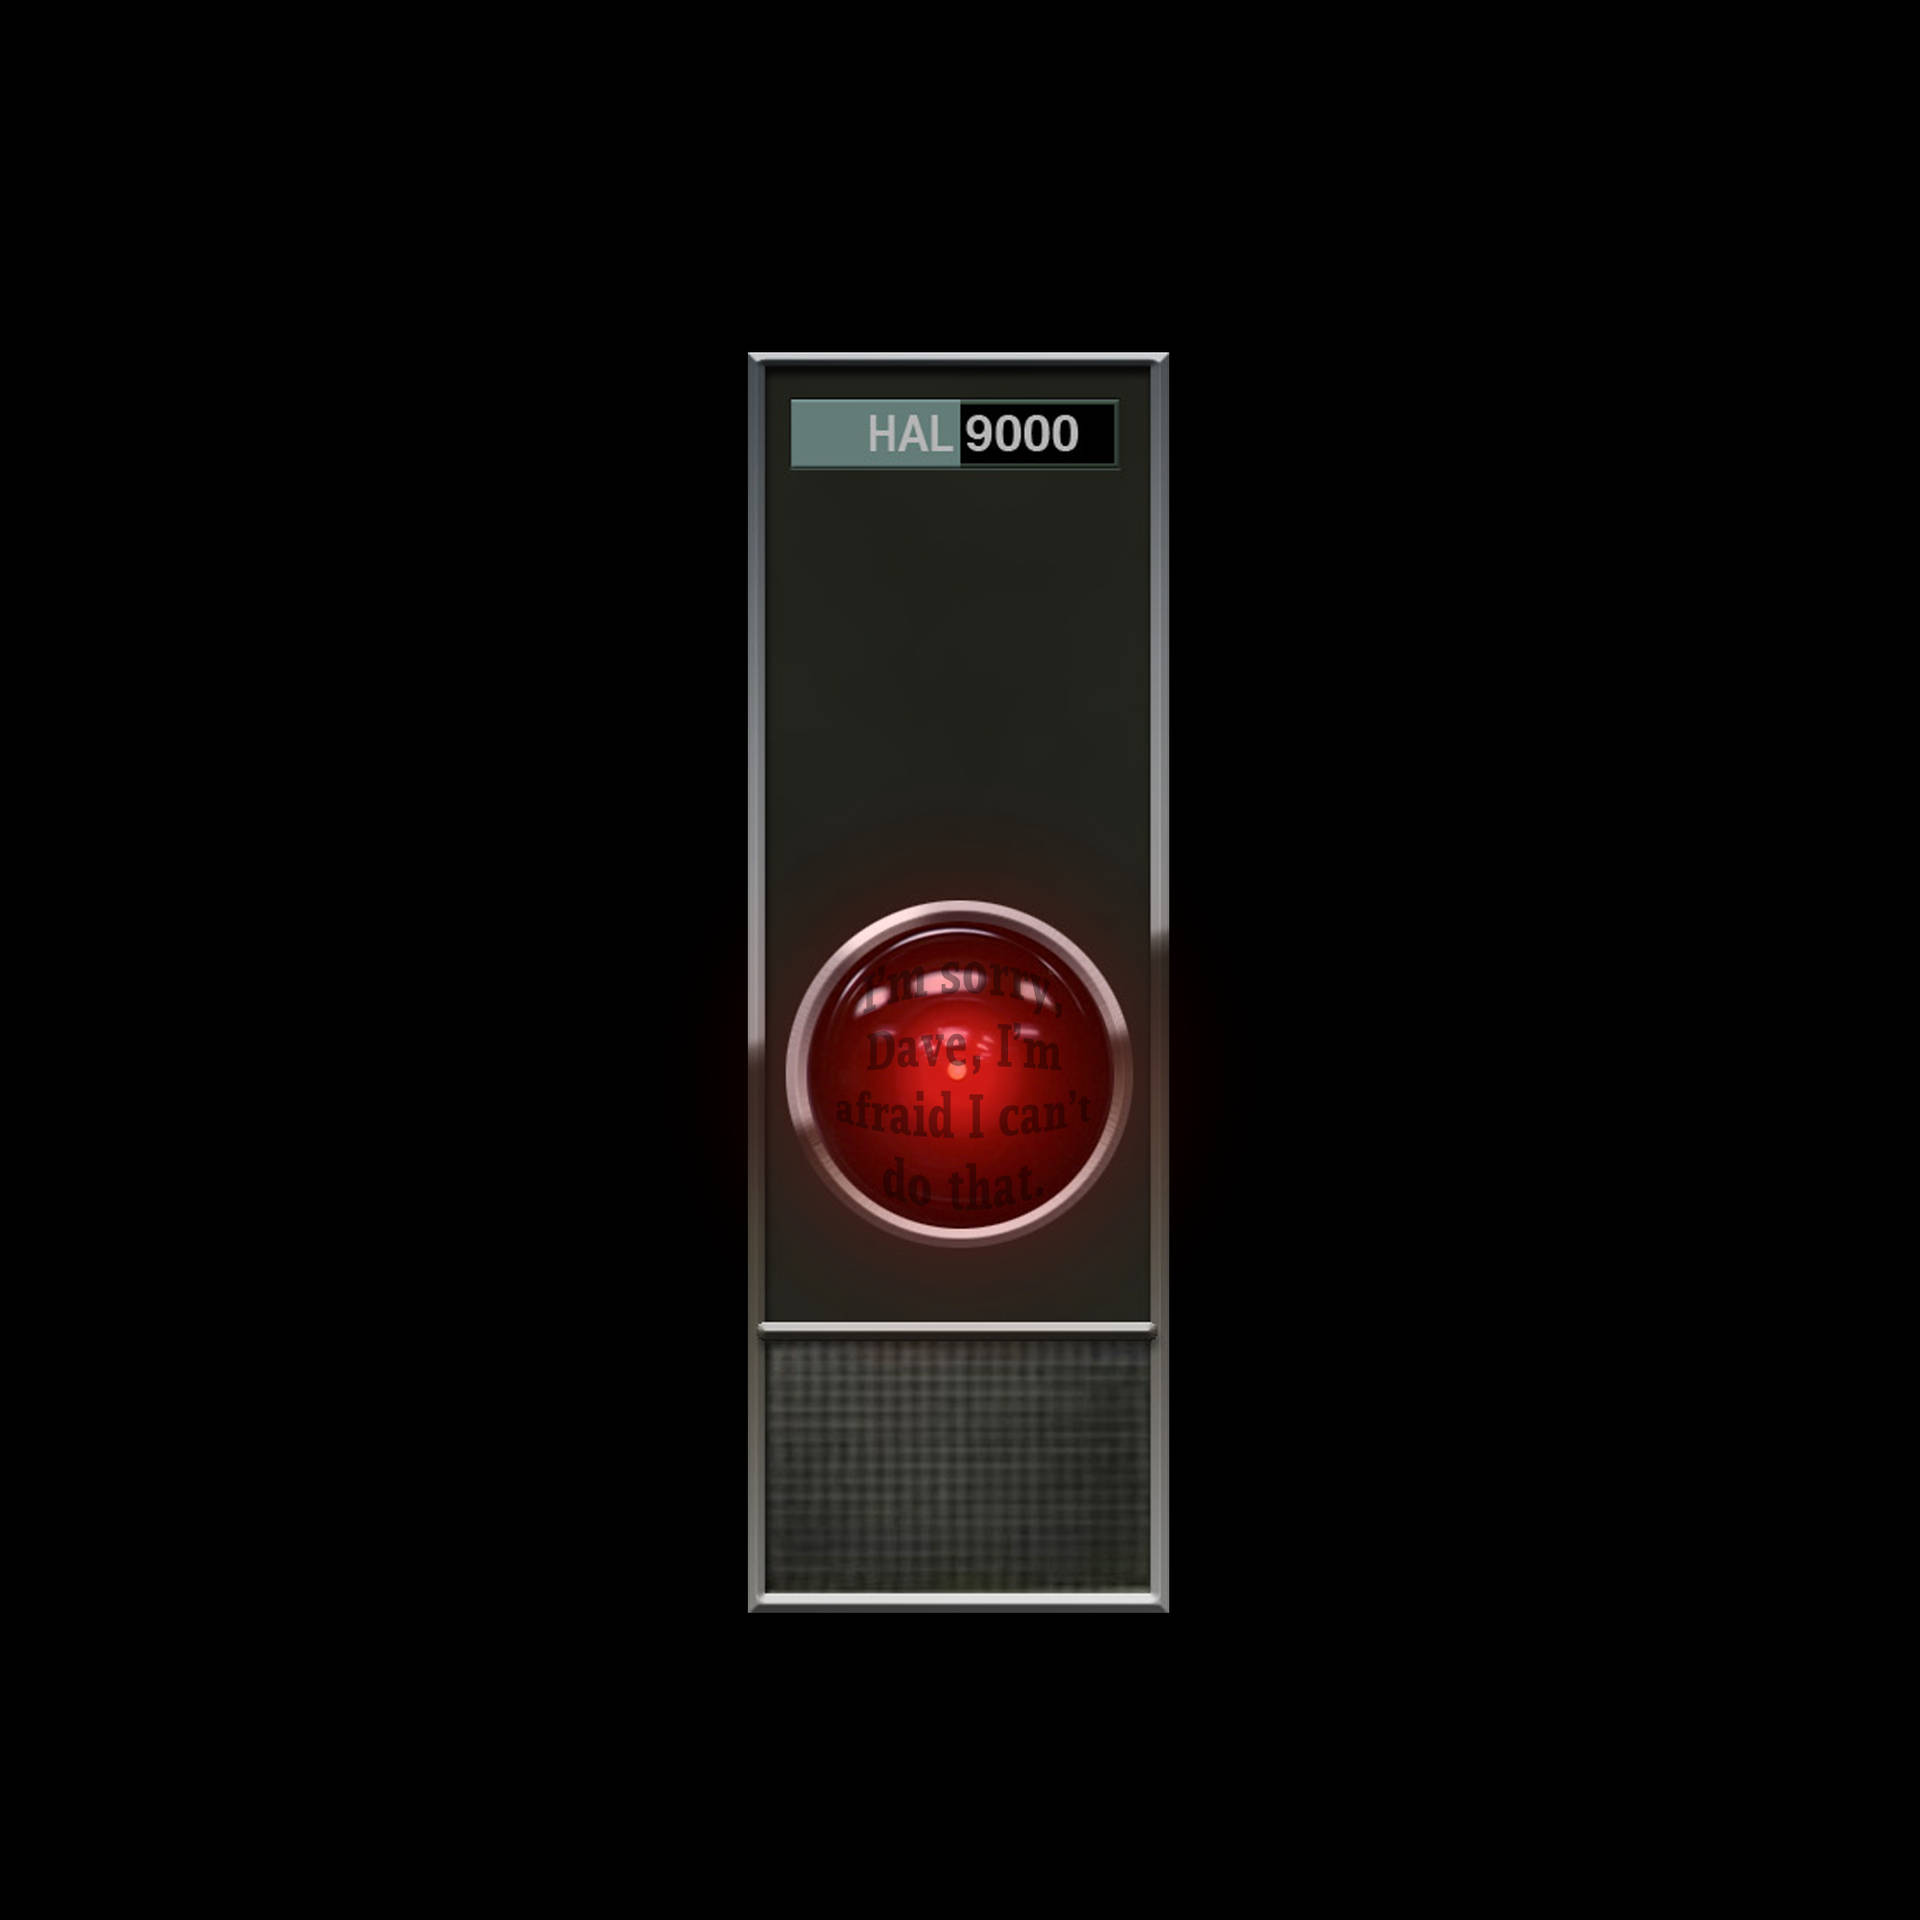 Hal 9000 Creepy Background